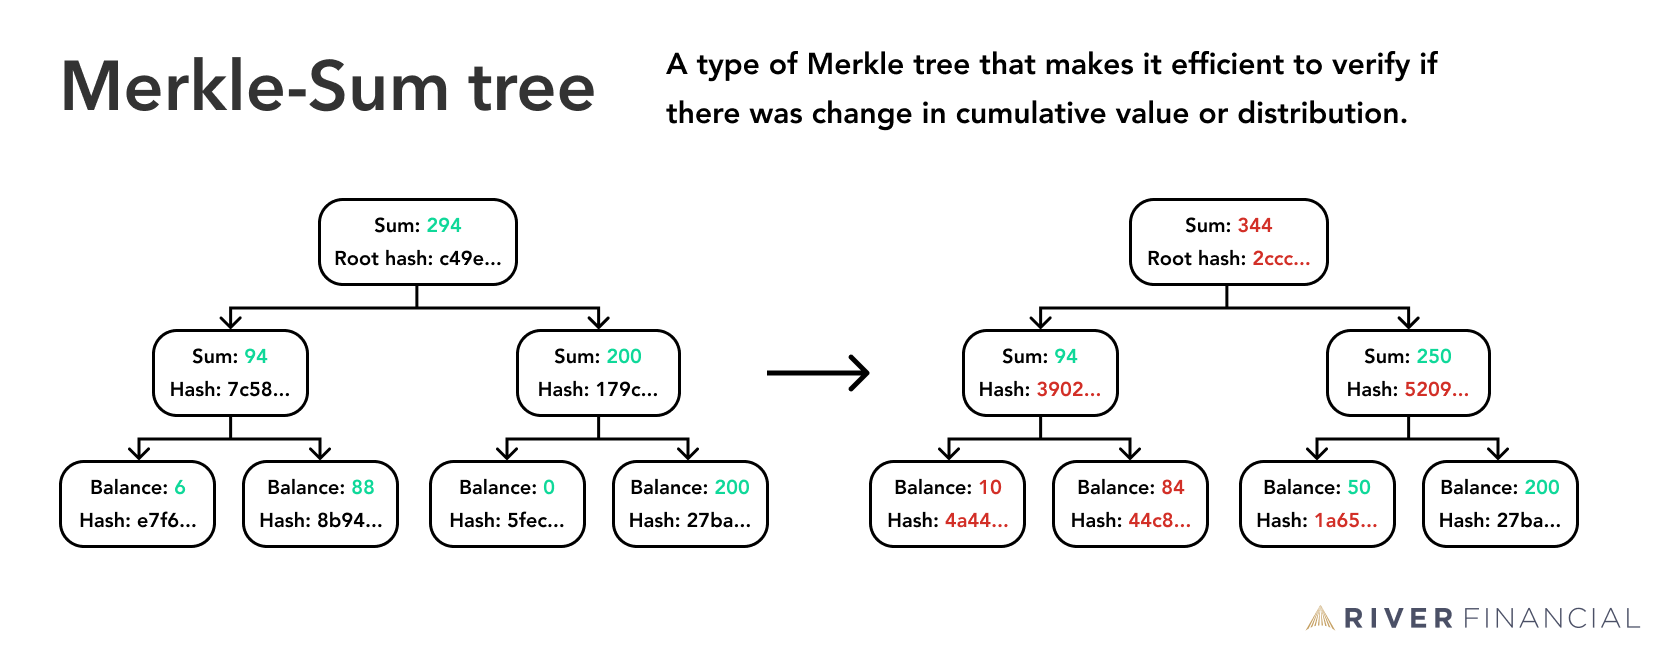 Merkle-Sum tree